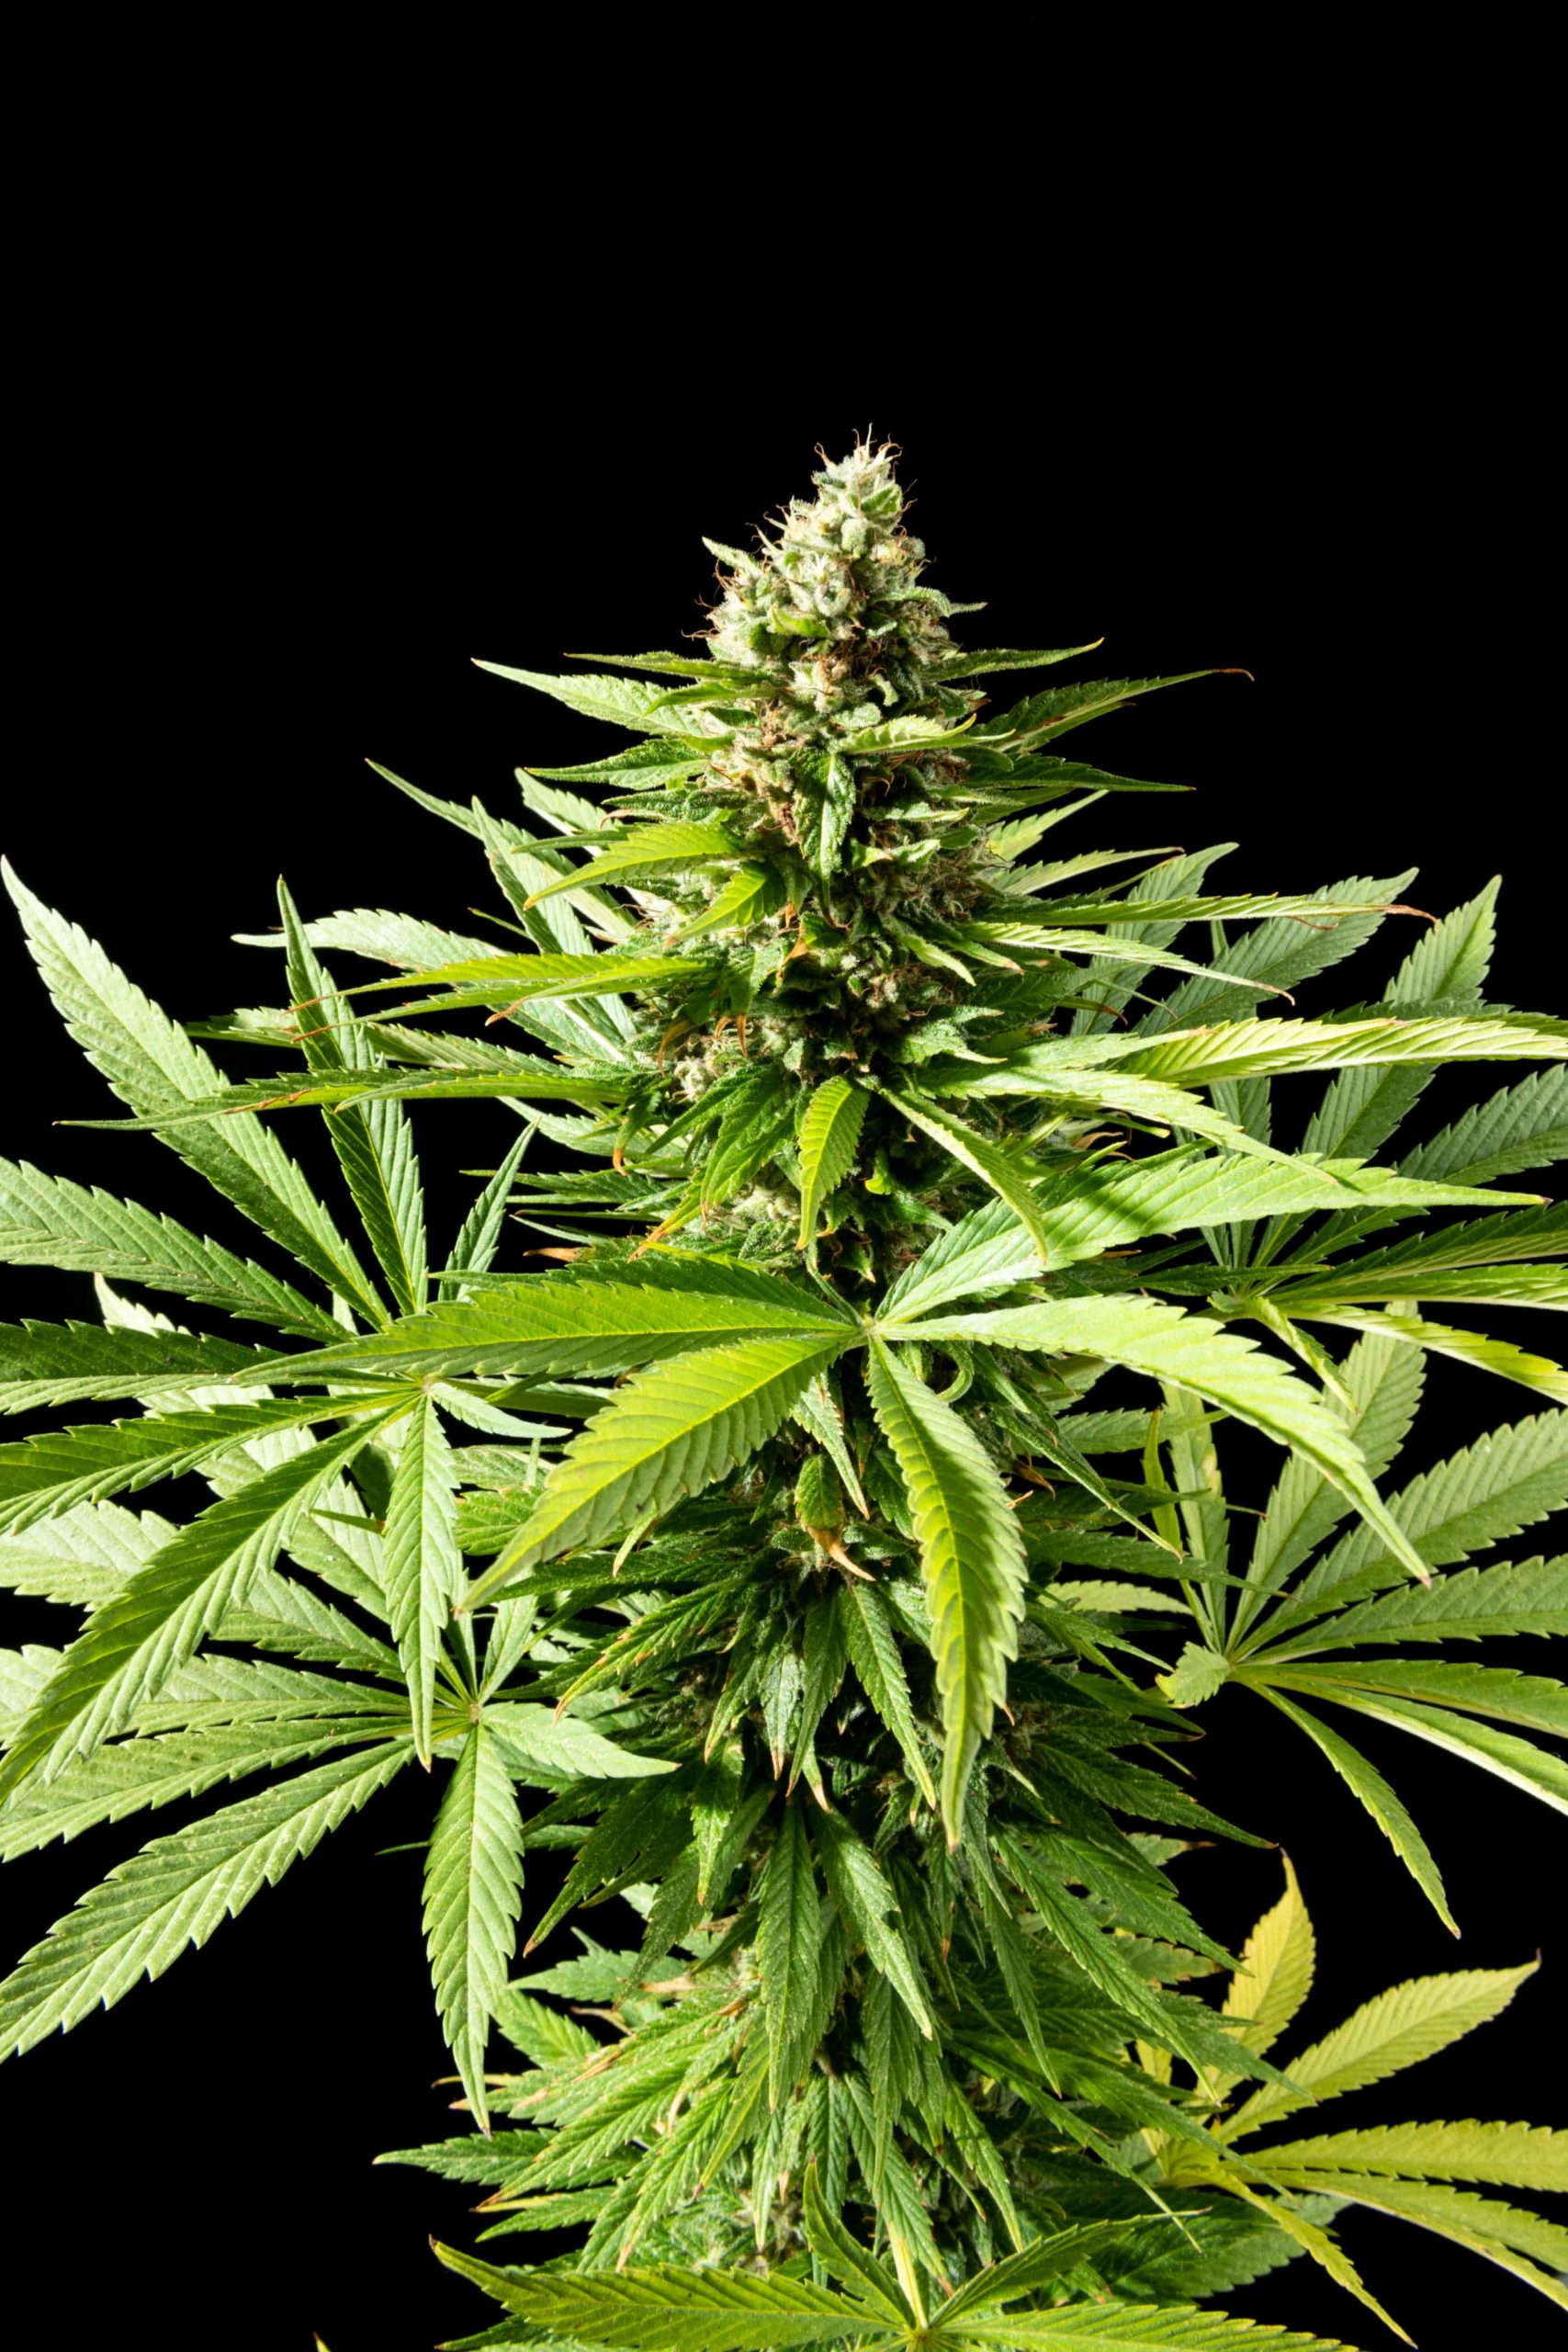 Rejoice! Cannabis Seeds are Legal